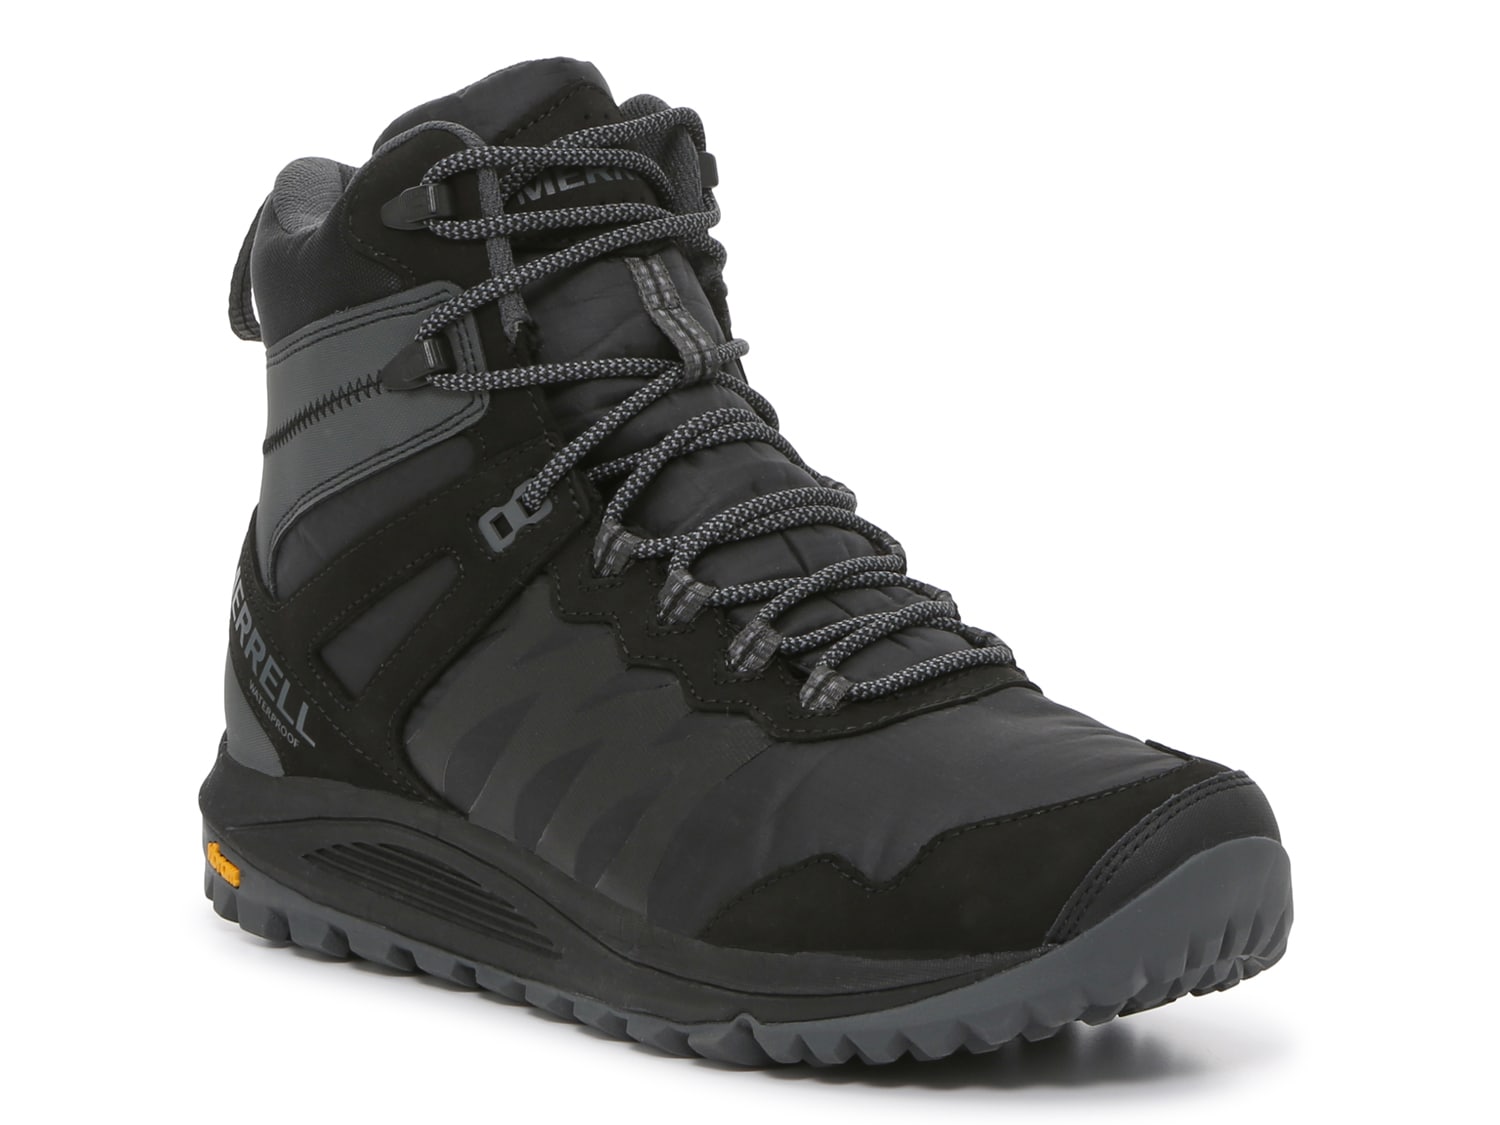 Merrell Nova Waterproof Hiking Boot - Men's - Free Shipping | DSW